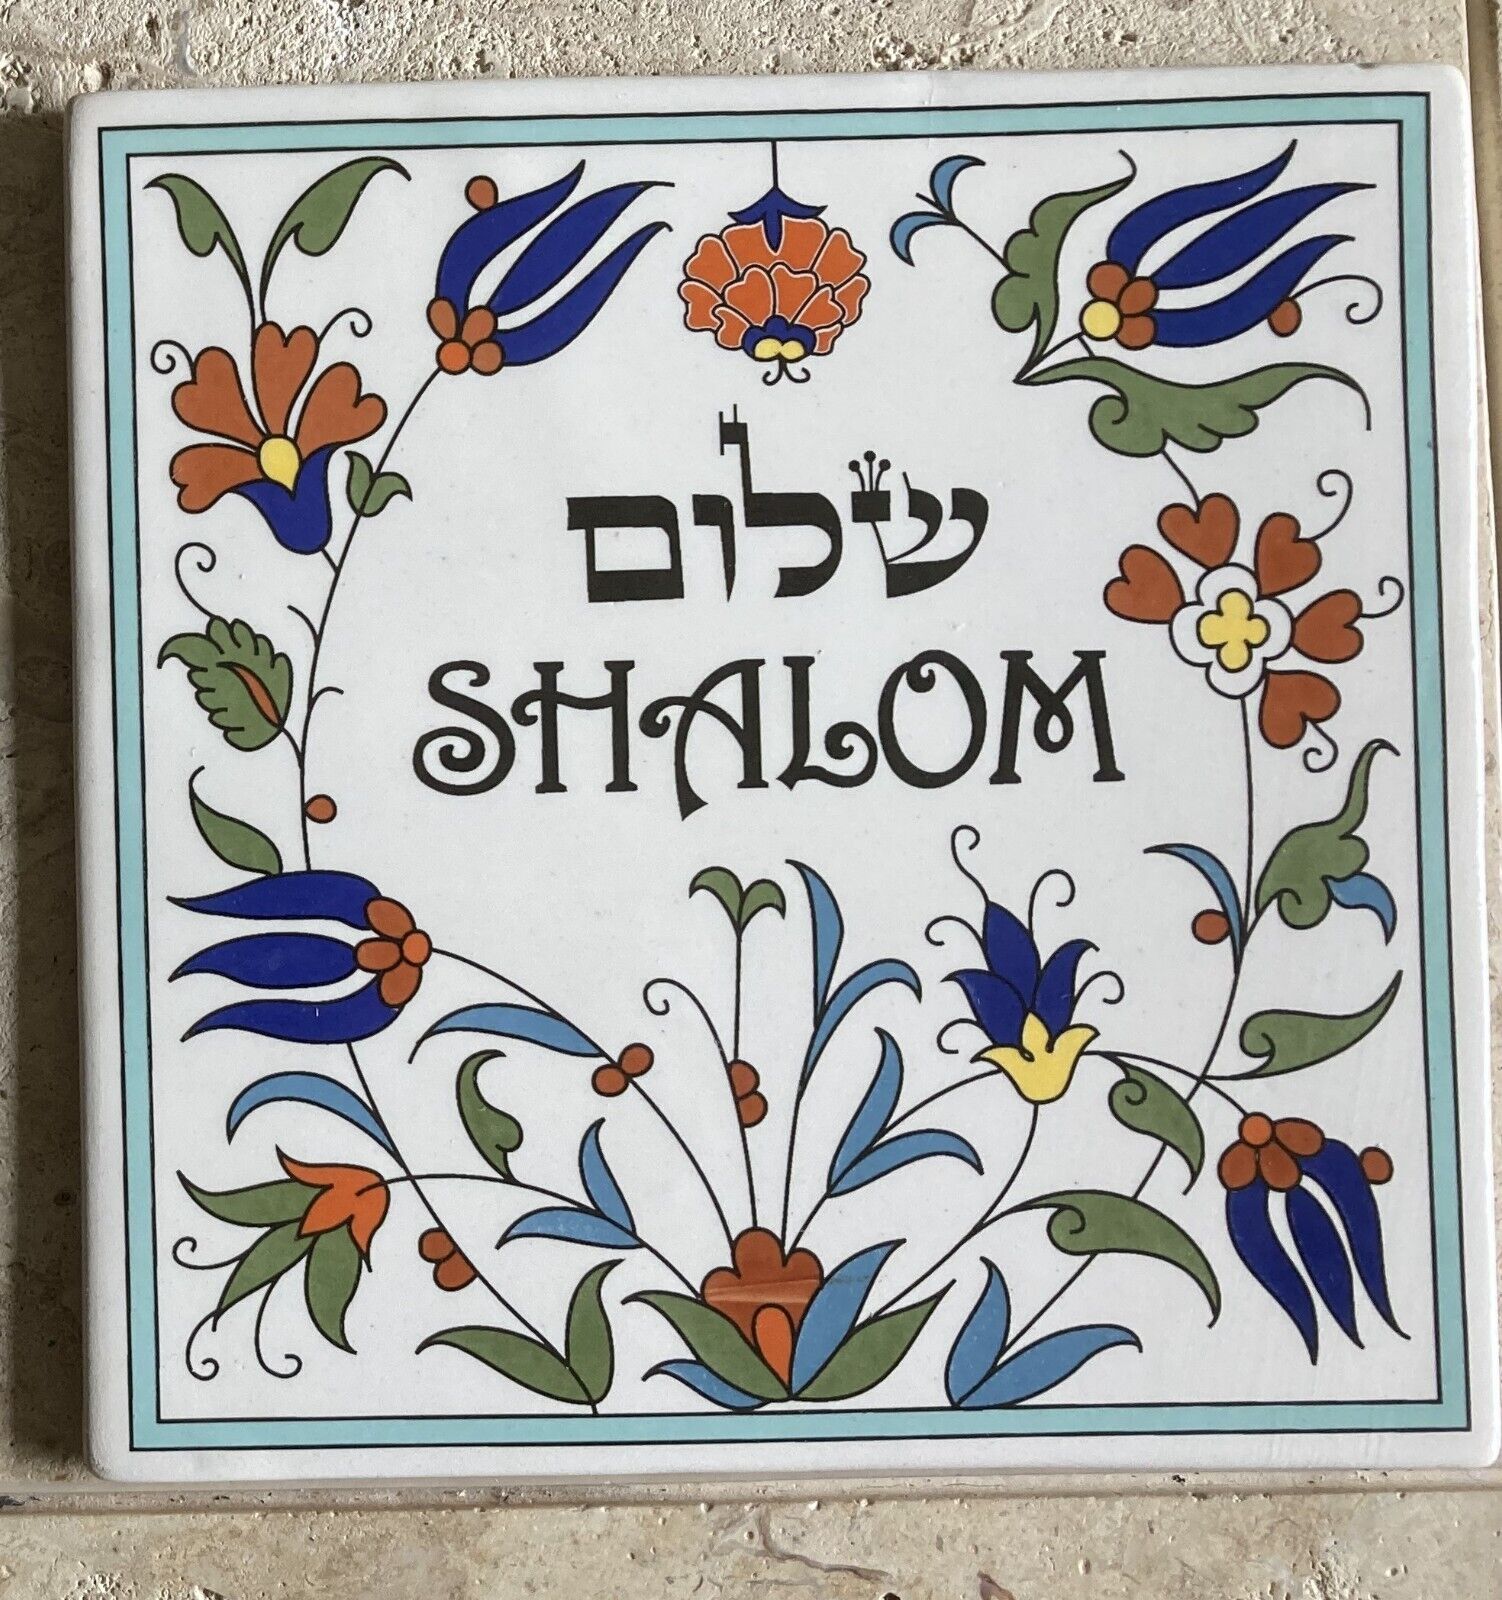 Shalom ceramic tile made in Israel Jerusalem door sign wall art decor